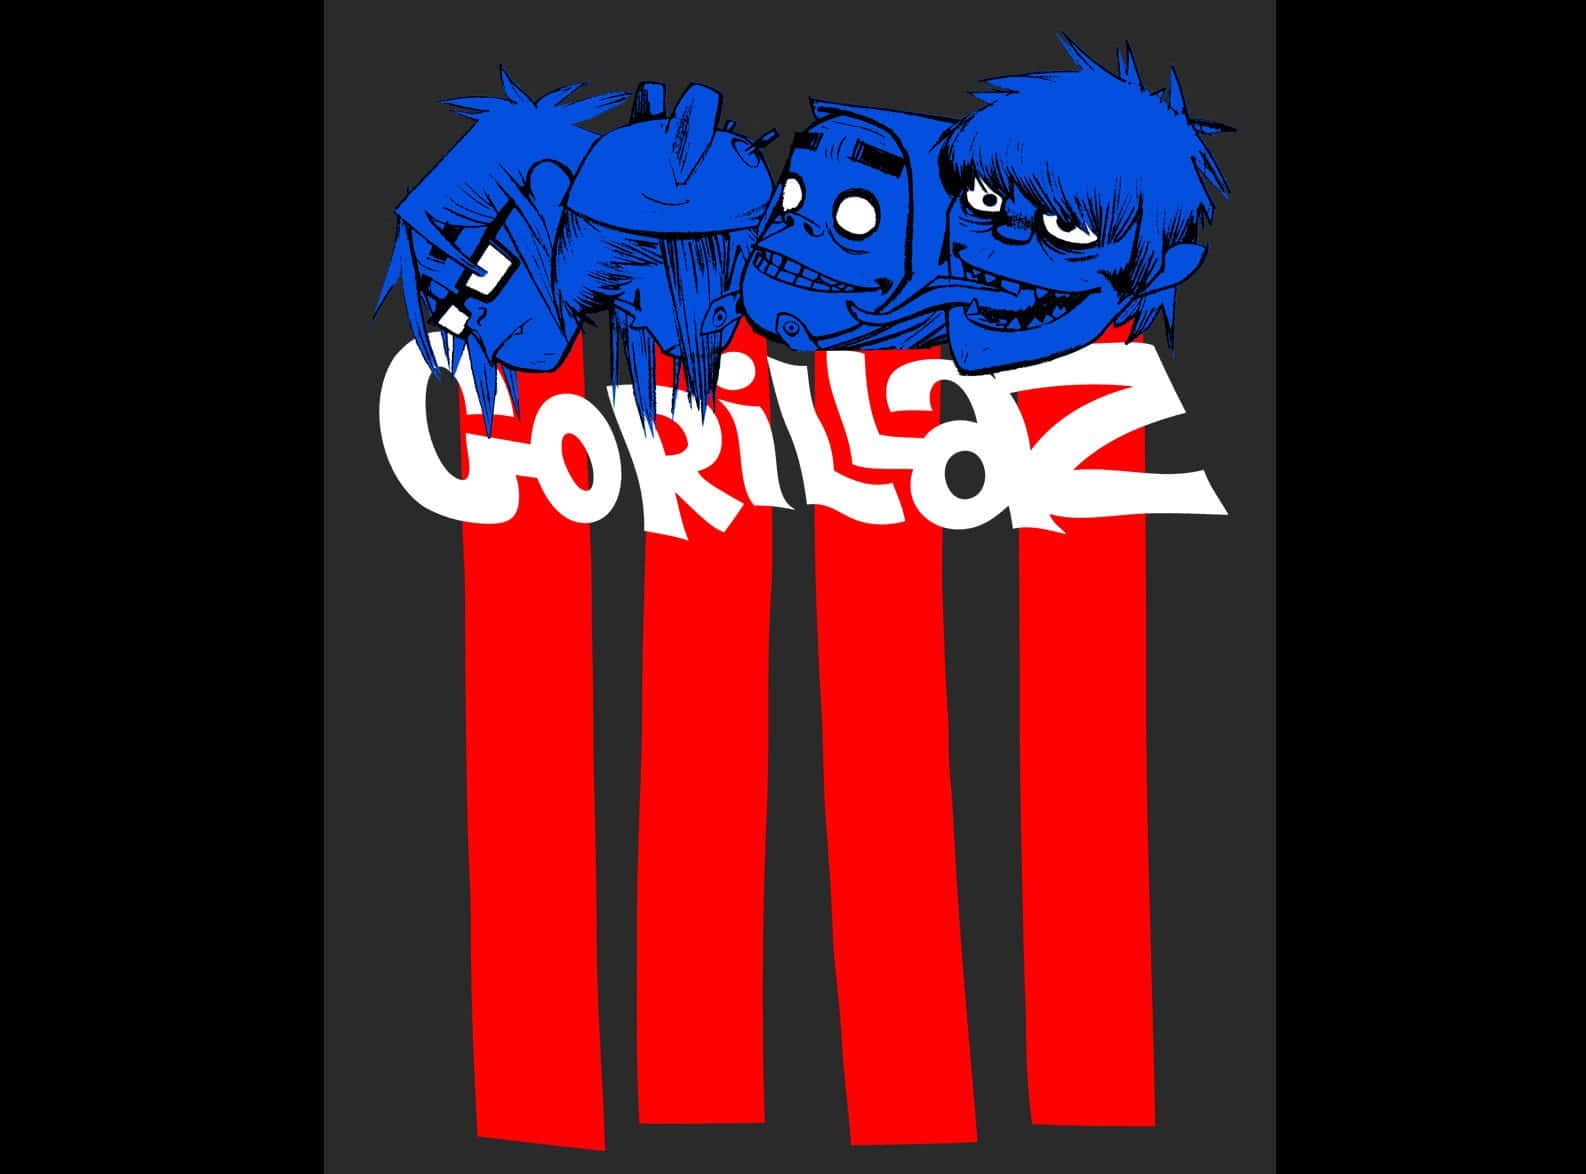 Gorillaz - Establishing Their Introspective and Experimental Artistic Legacy